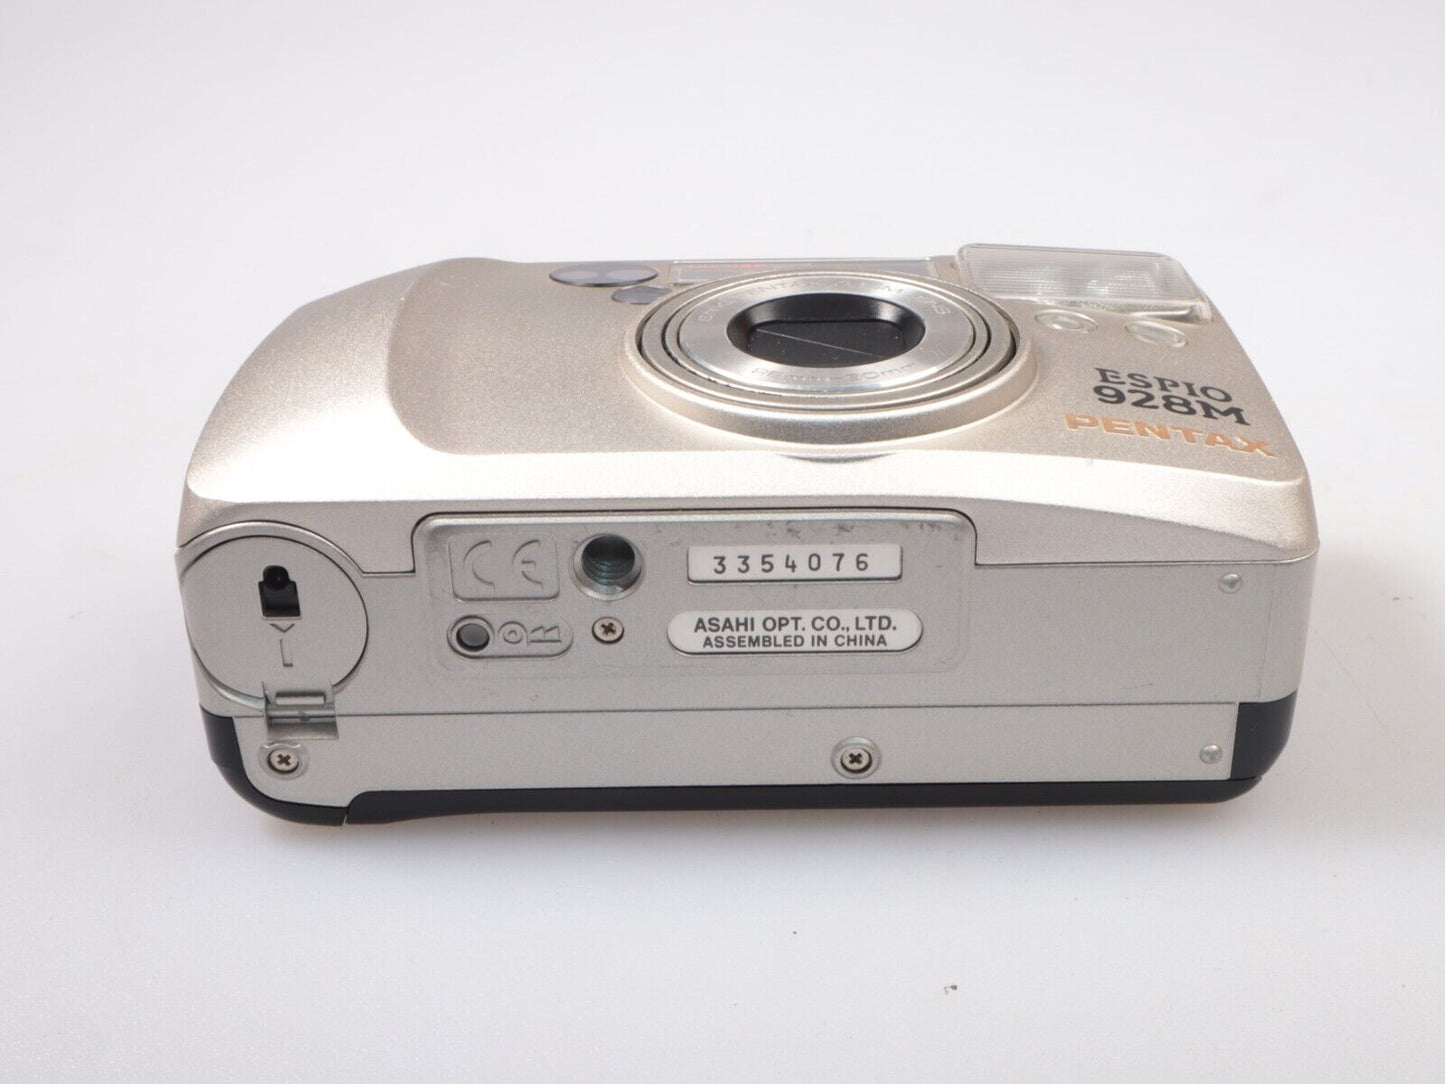 Pentax Espio 928M | 35mm Point and shoot Film Camera | Gold